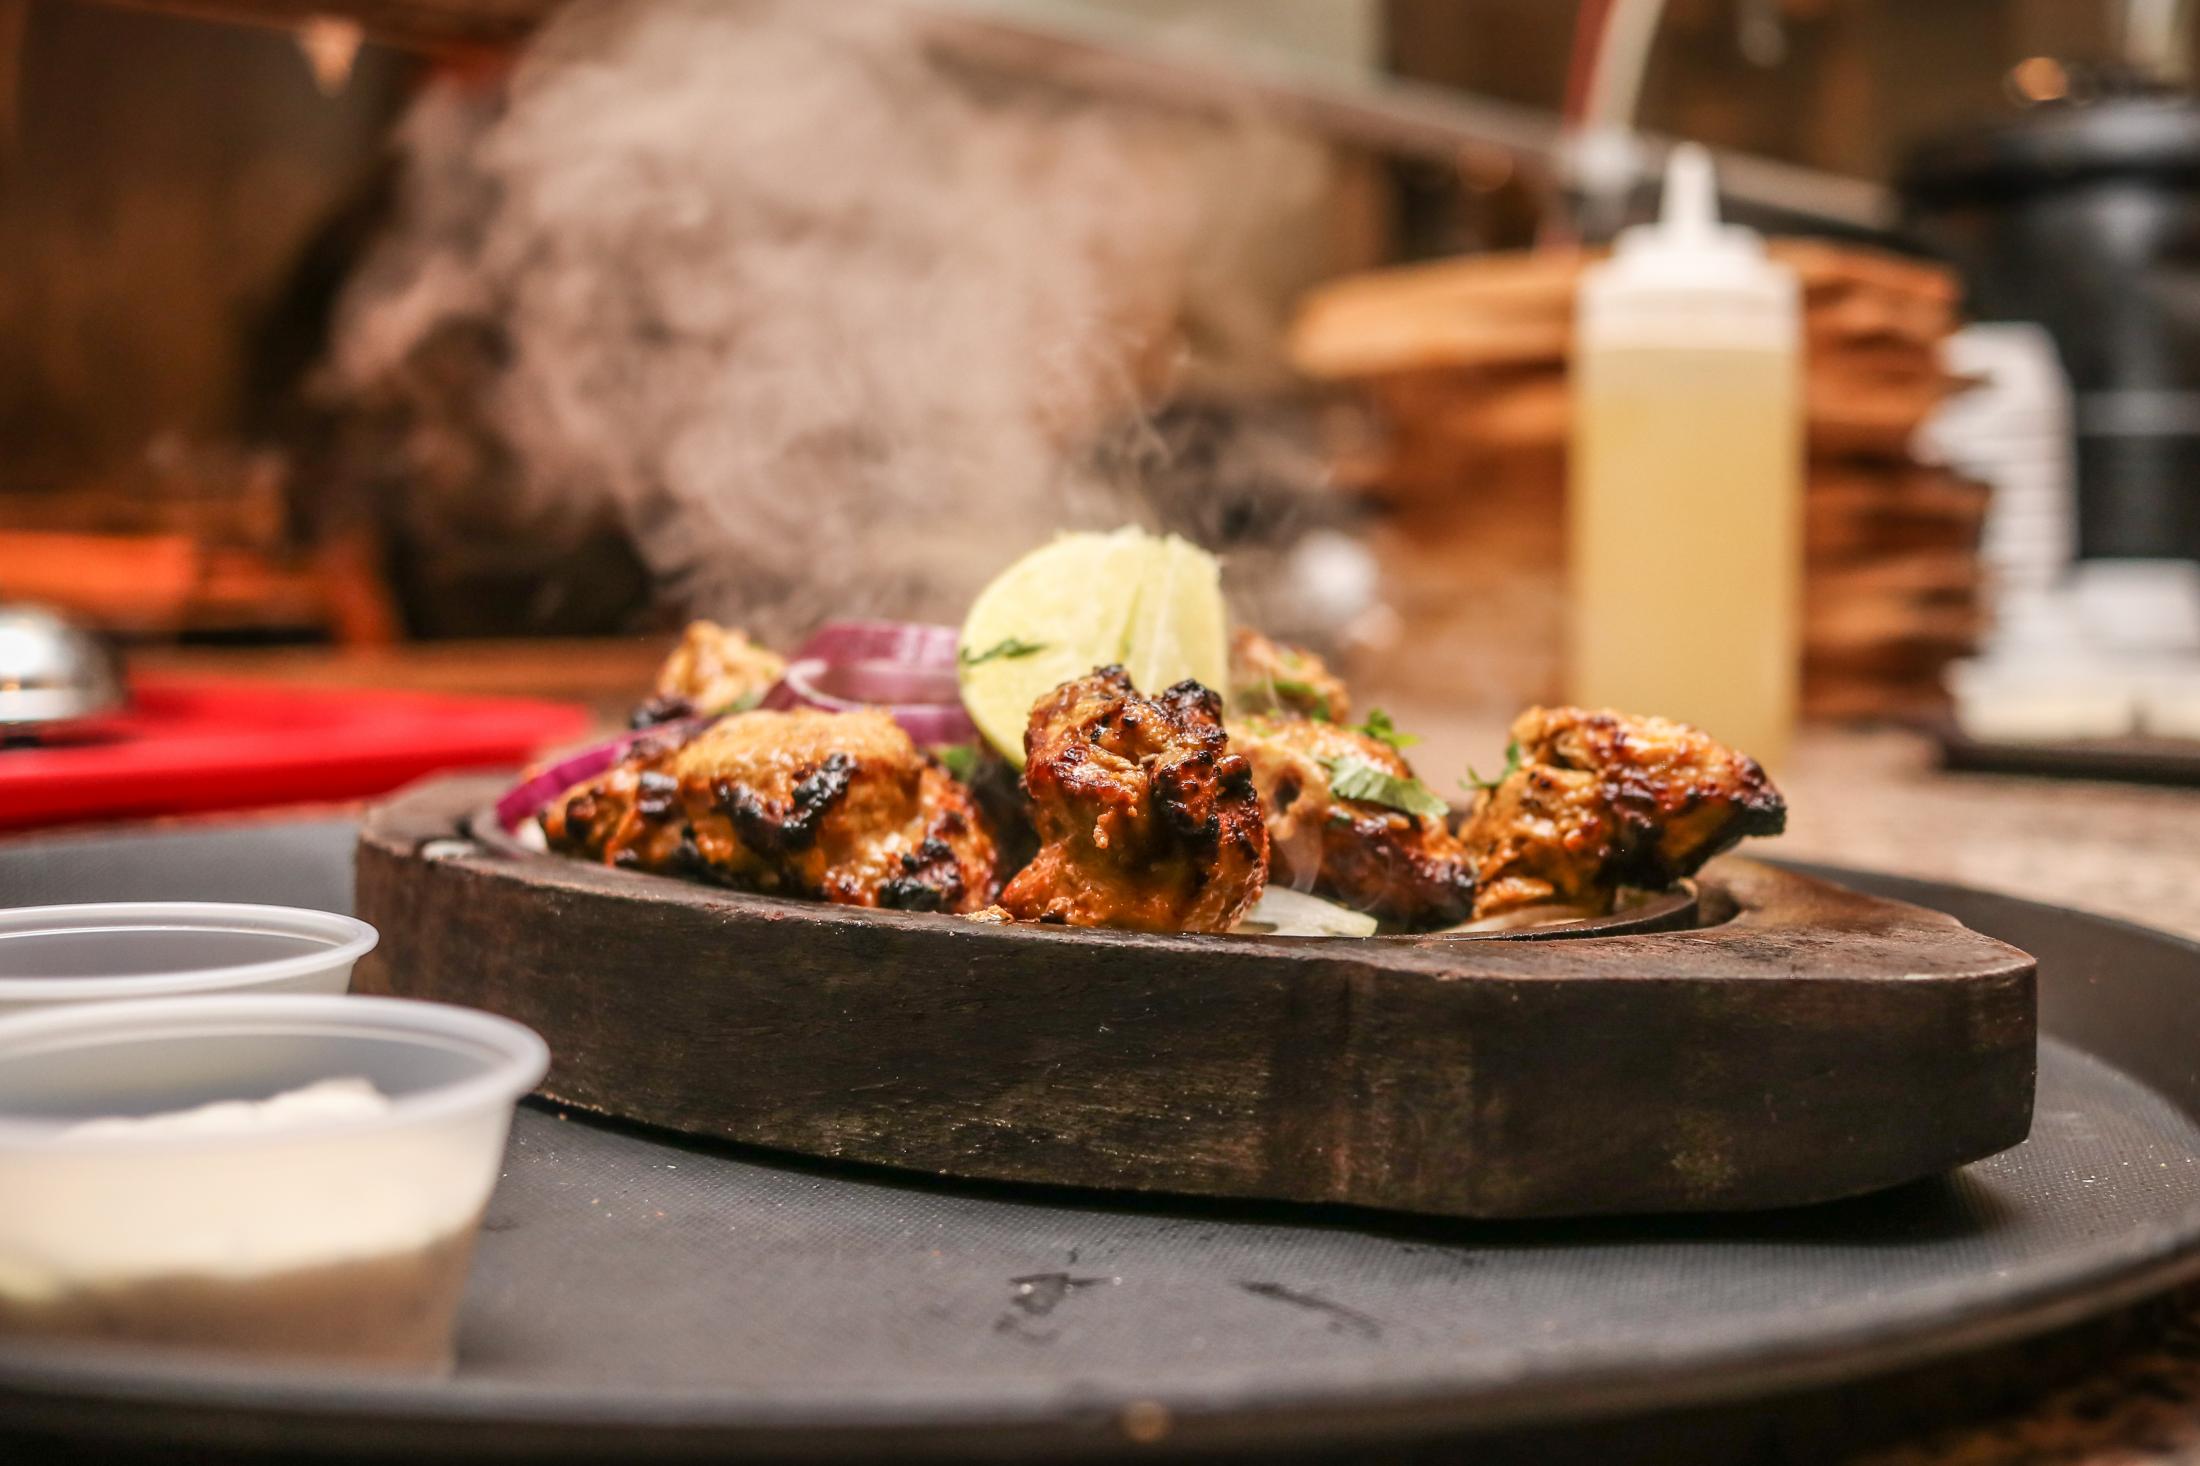 Indian Food - Chicken Kebab at Palamuru Grill in Santa Clara, Calif.,...